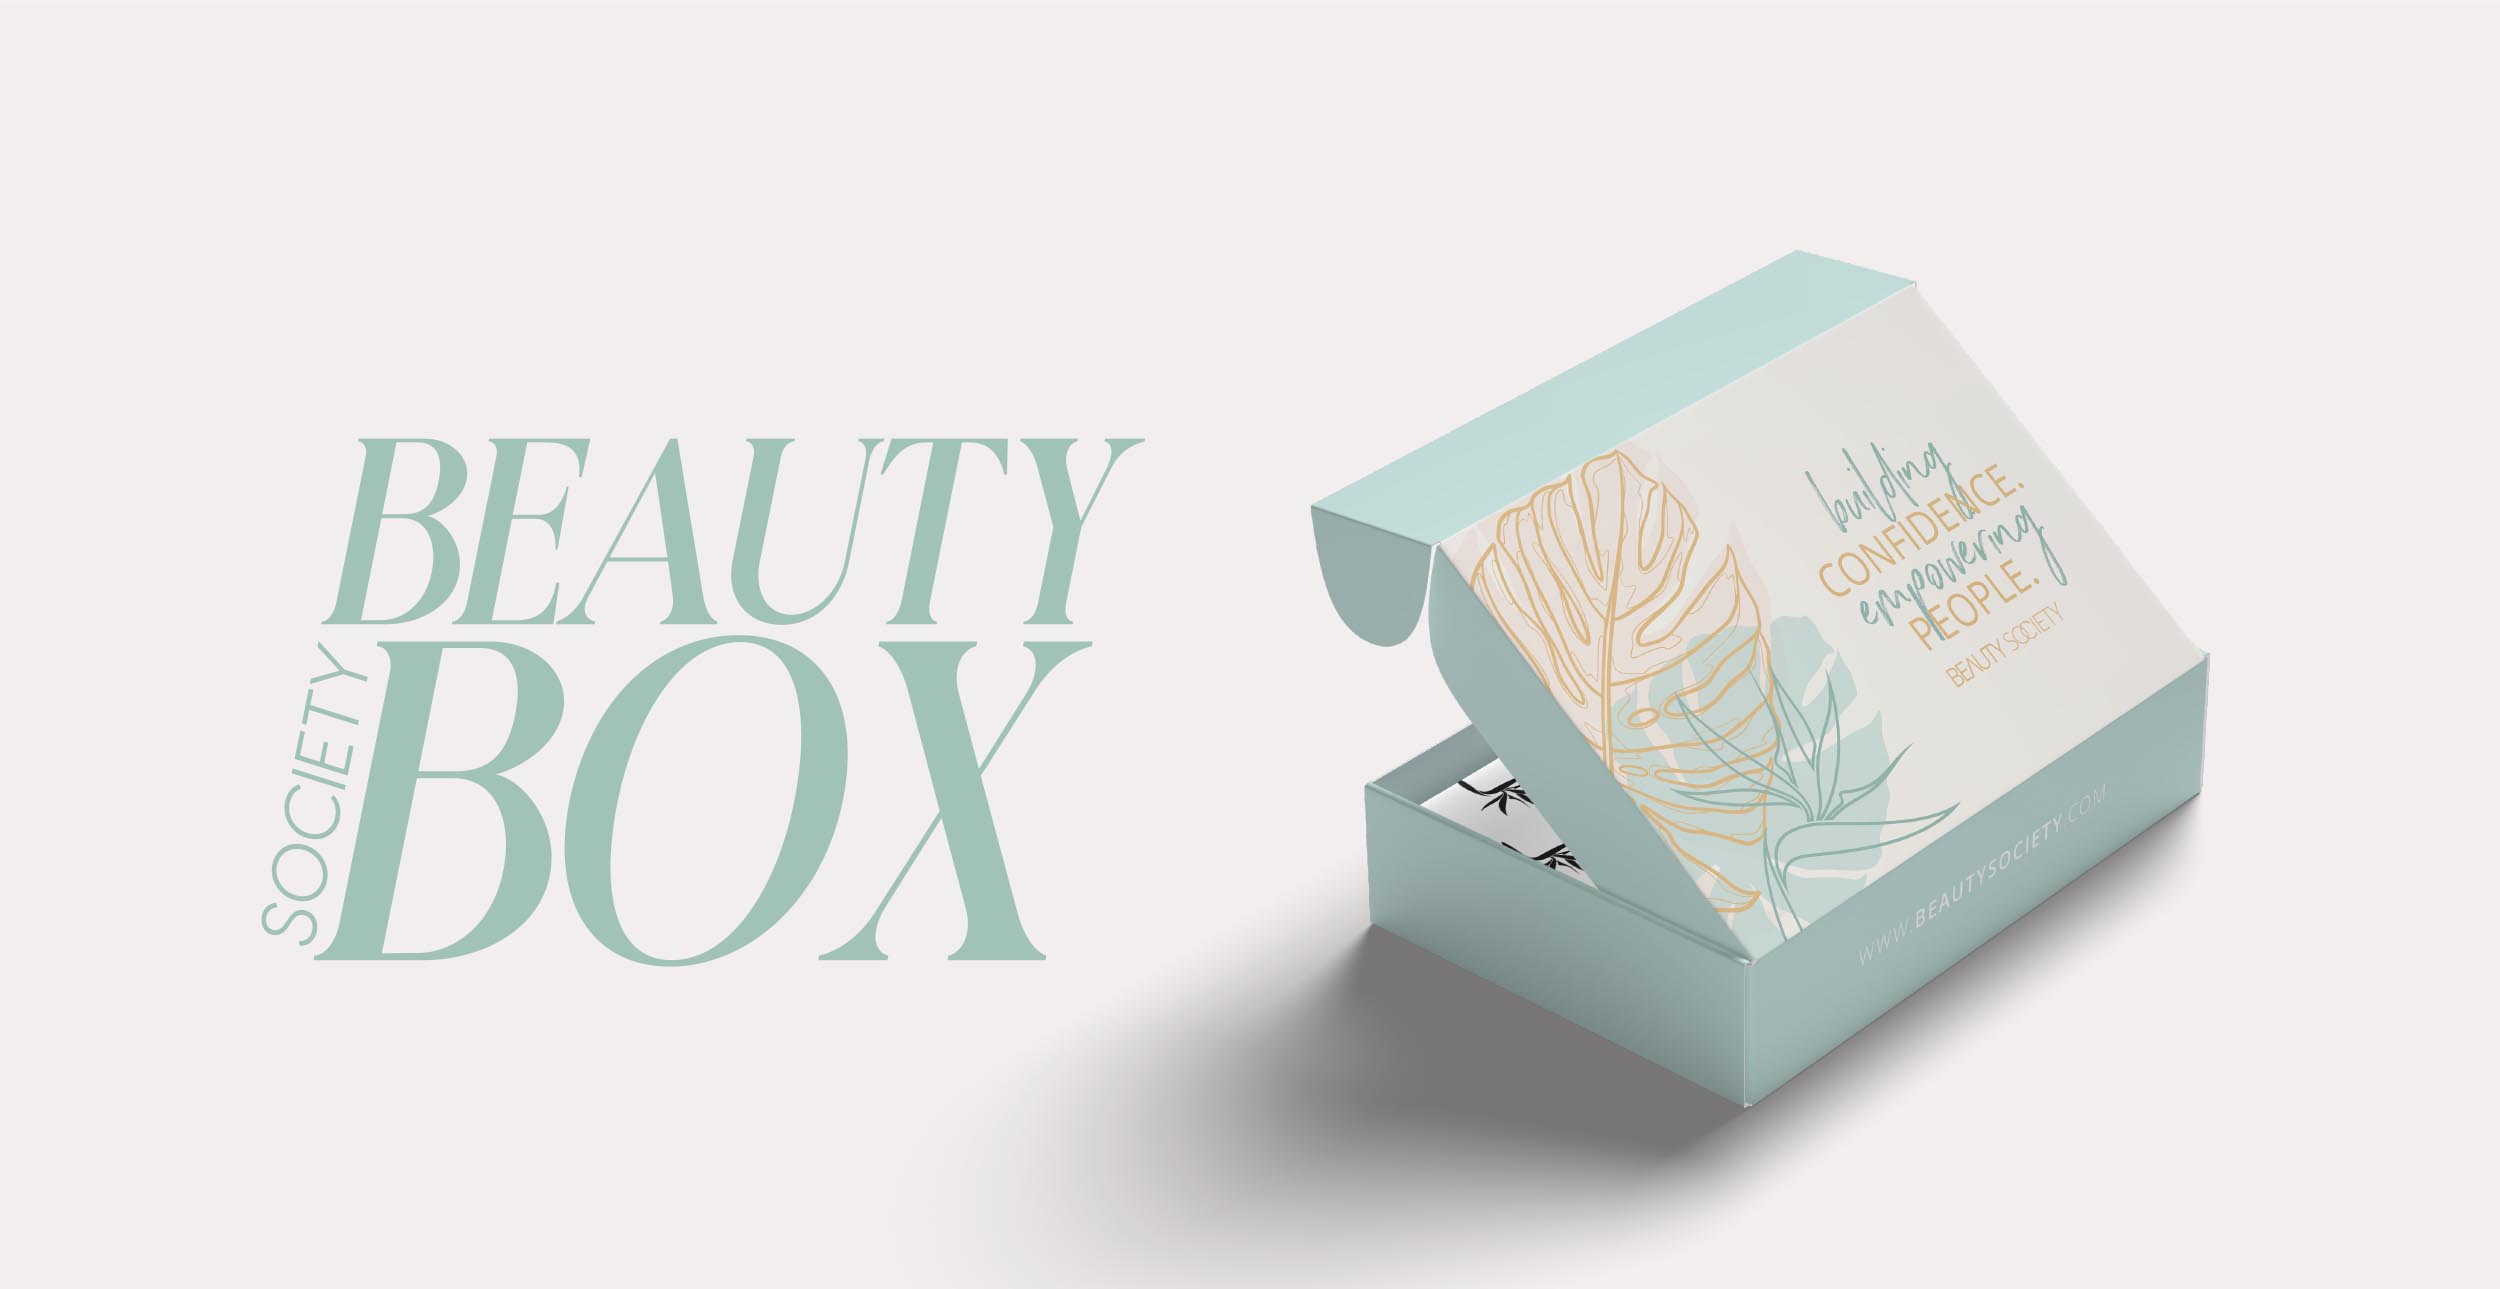 Beautybox - Hear your senses